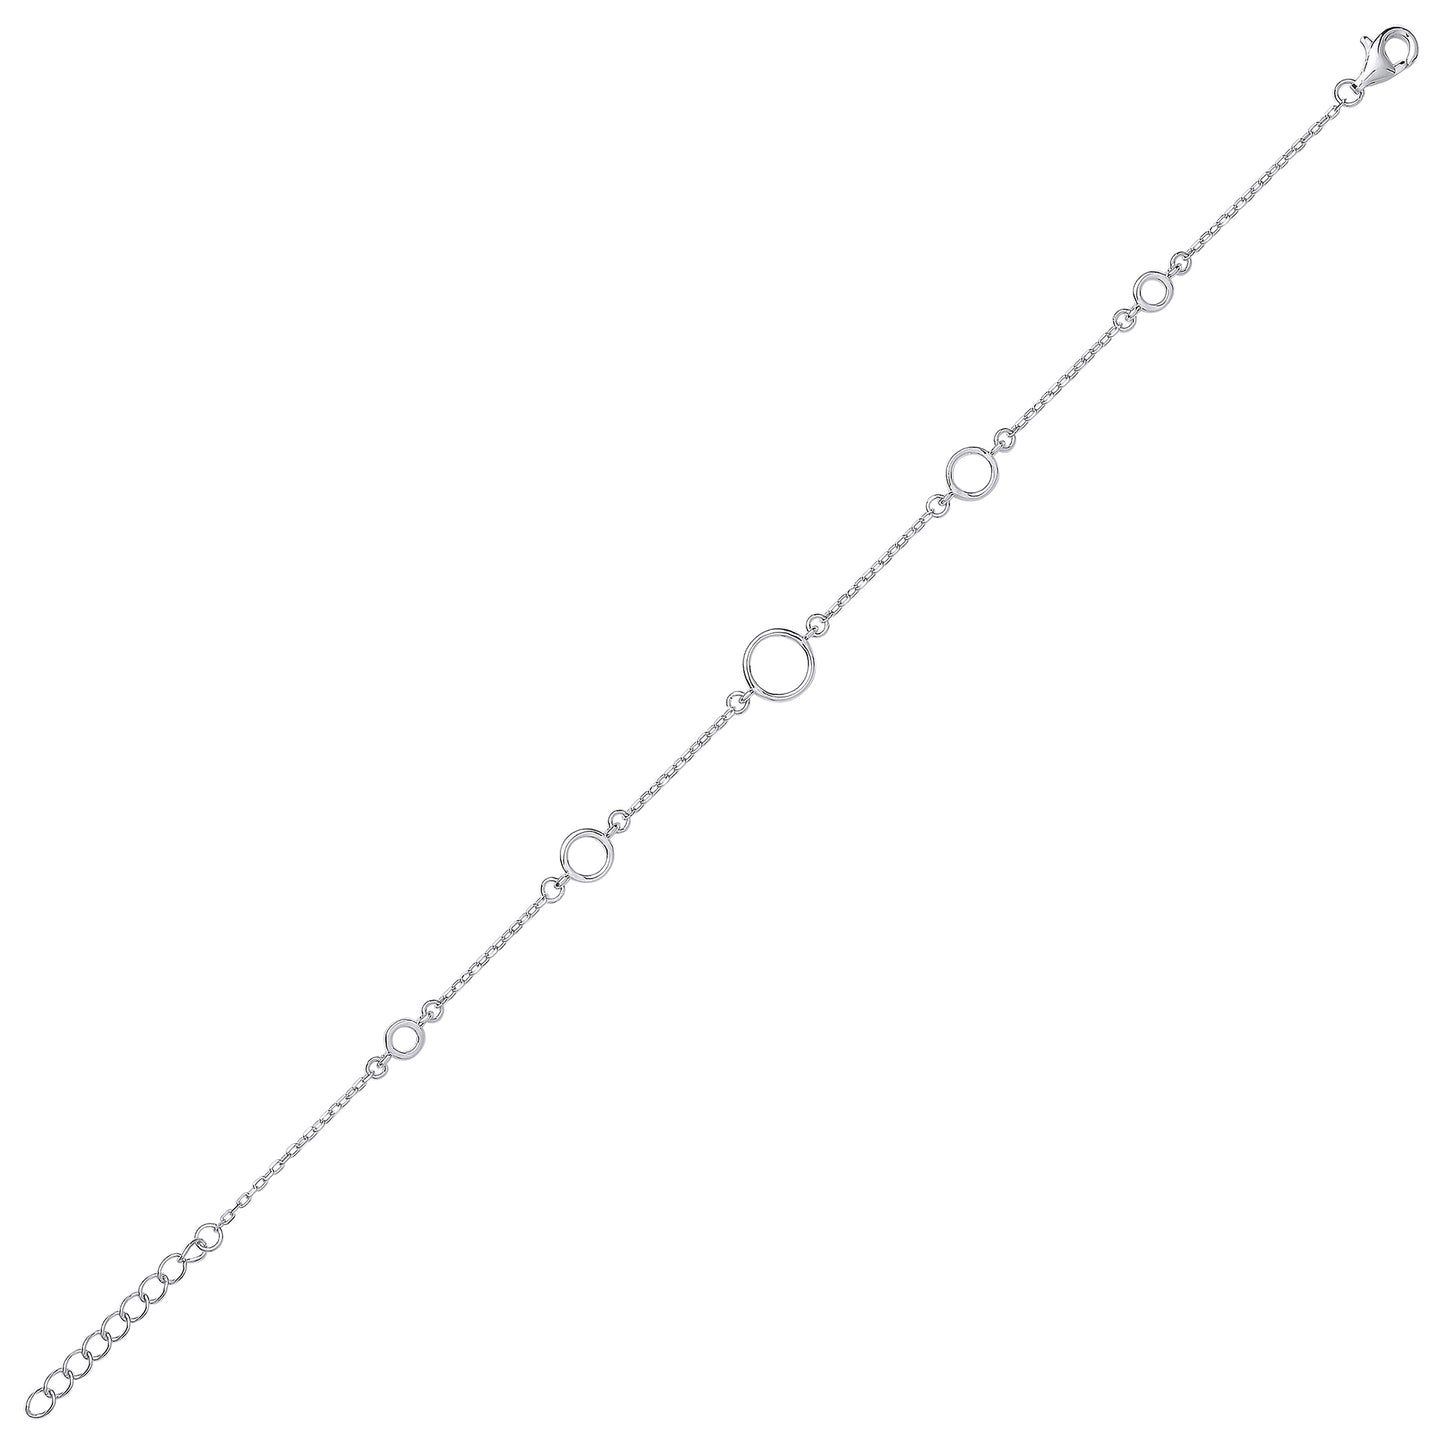 Silver  Rings Per Inch Charm Bracelet 7mm - GVB440